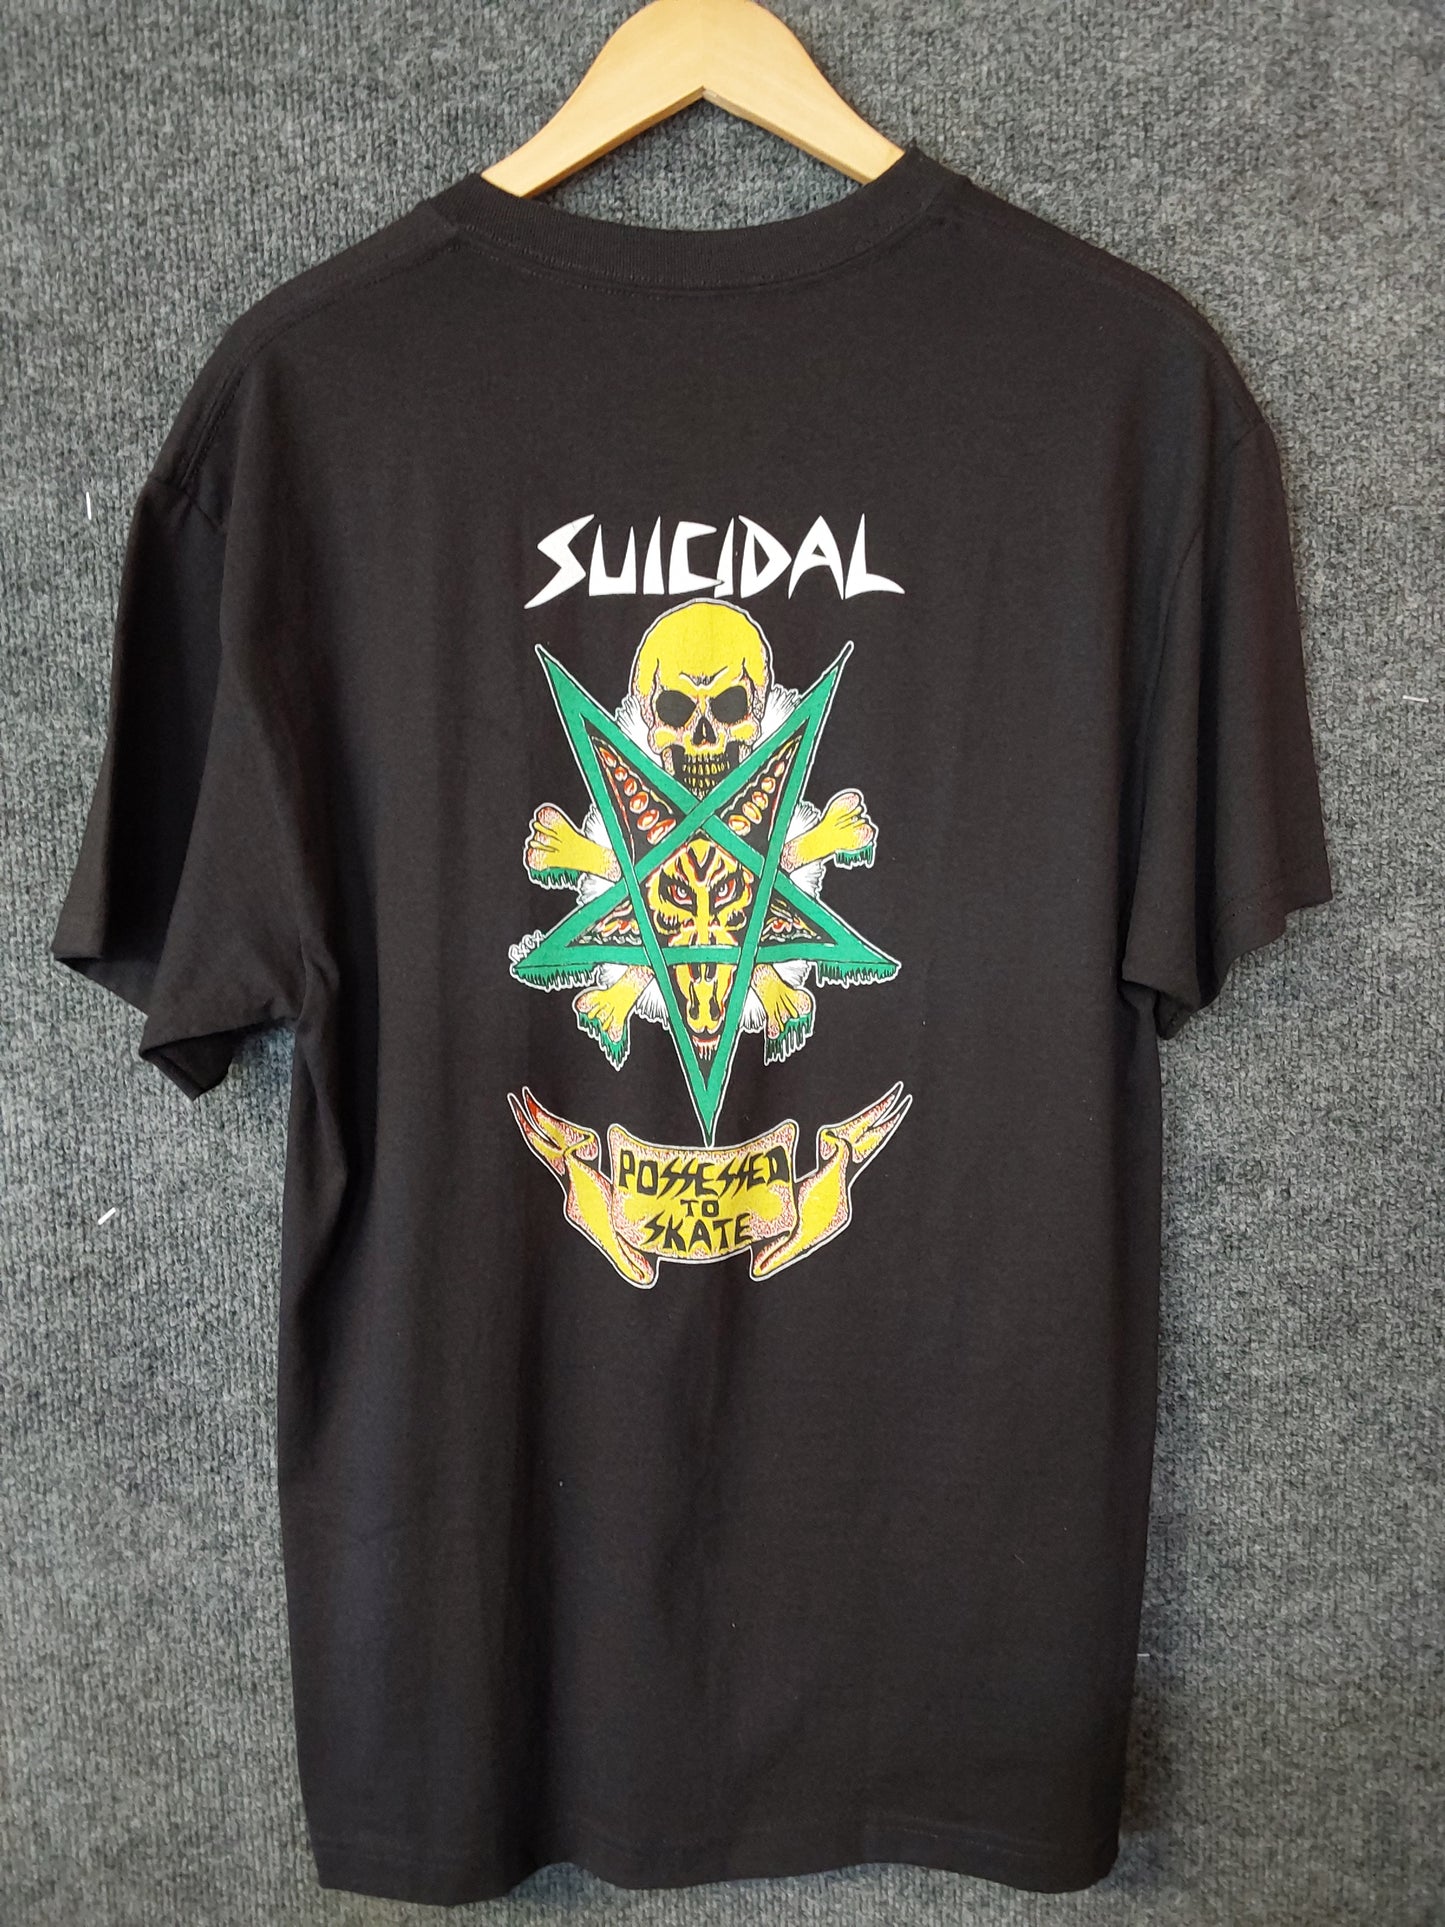 Suicidal Skates Possessed To Skate T-Shirt